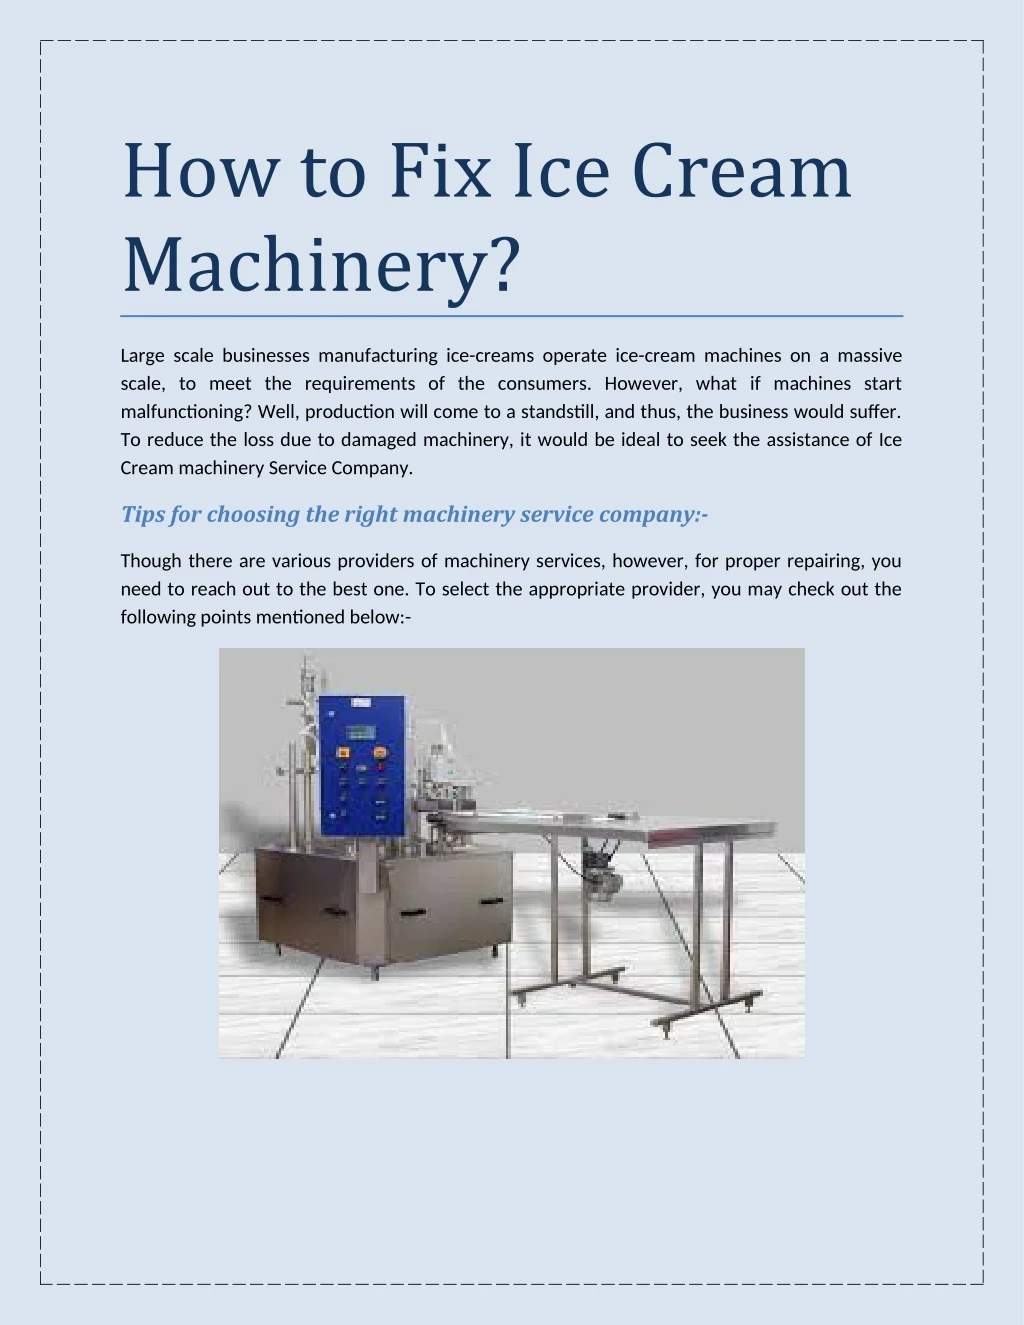 how to fix ice cream machinery